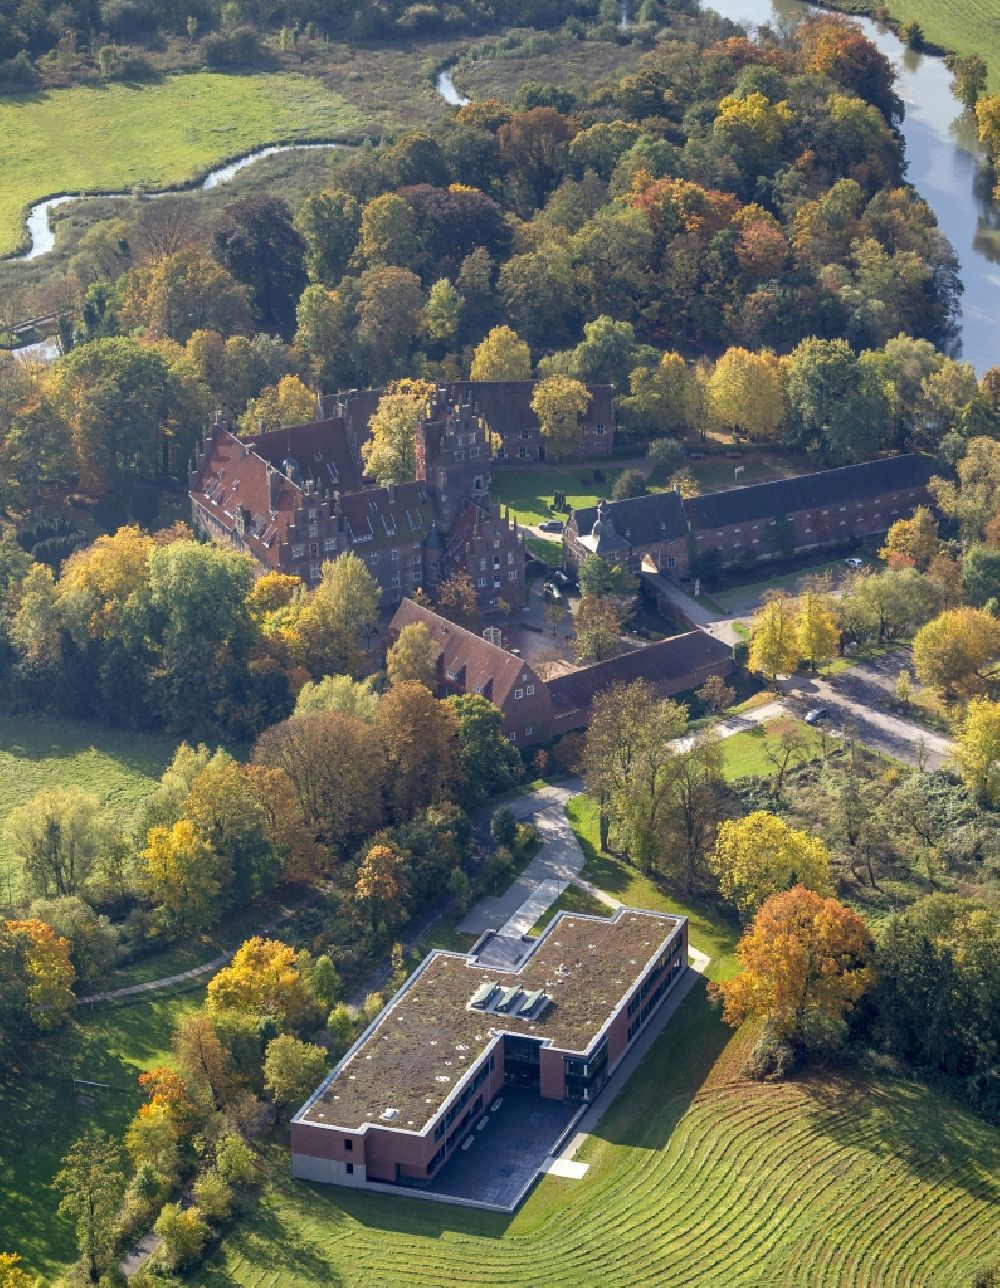 Hamm / Heessen from the bird's eye view: Water Castle and former Knights Castle Heessen seat in the same district of Hamm in North Rhine-Westphalia NRW